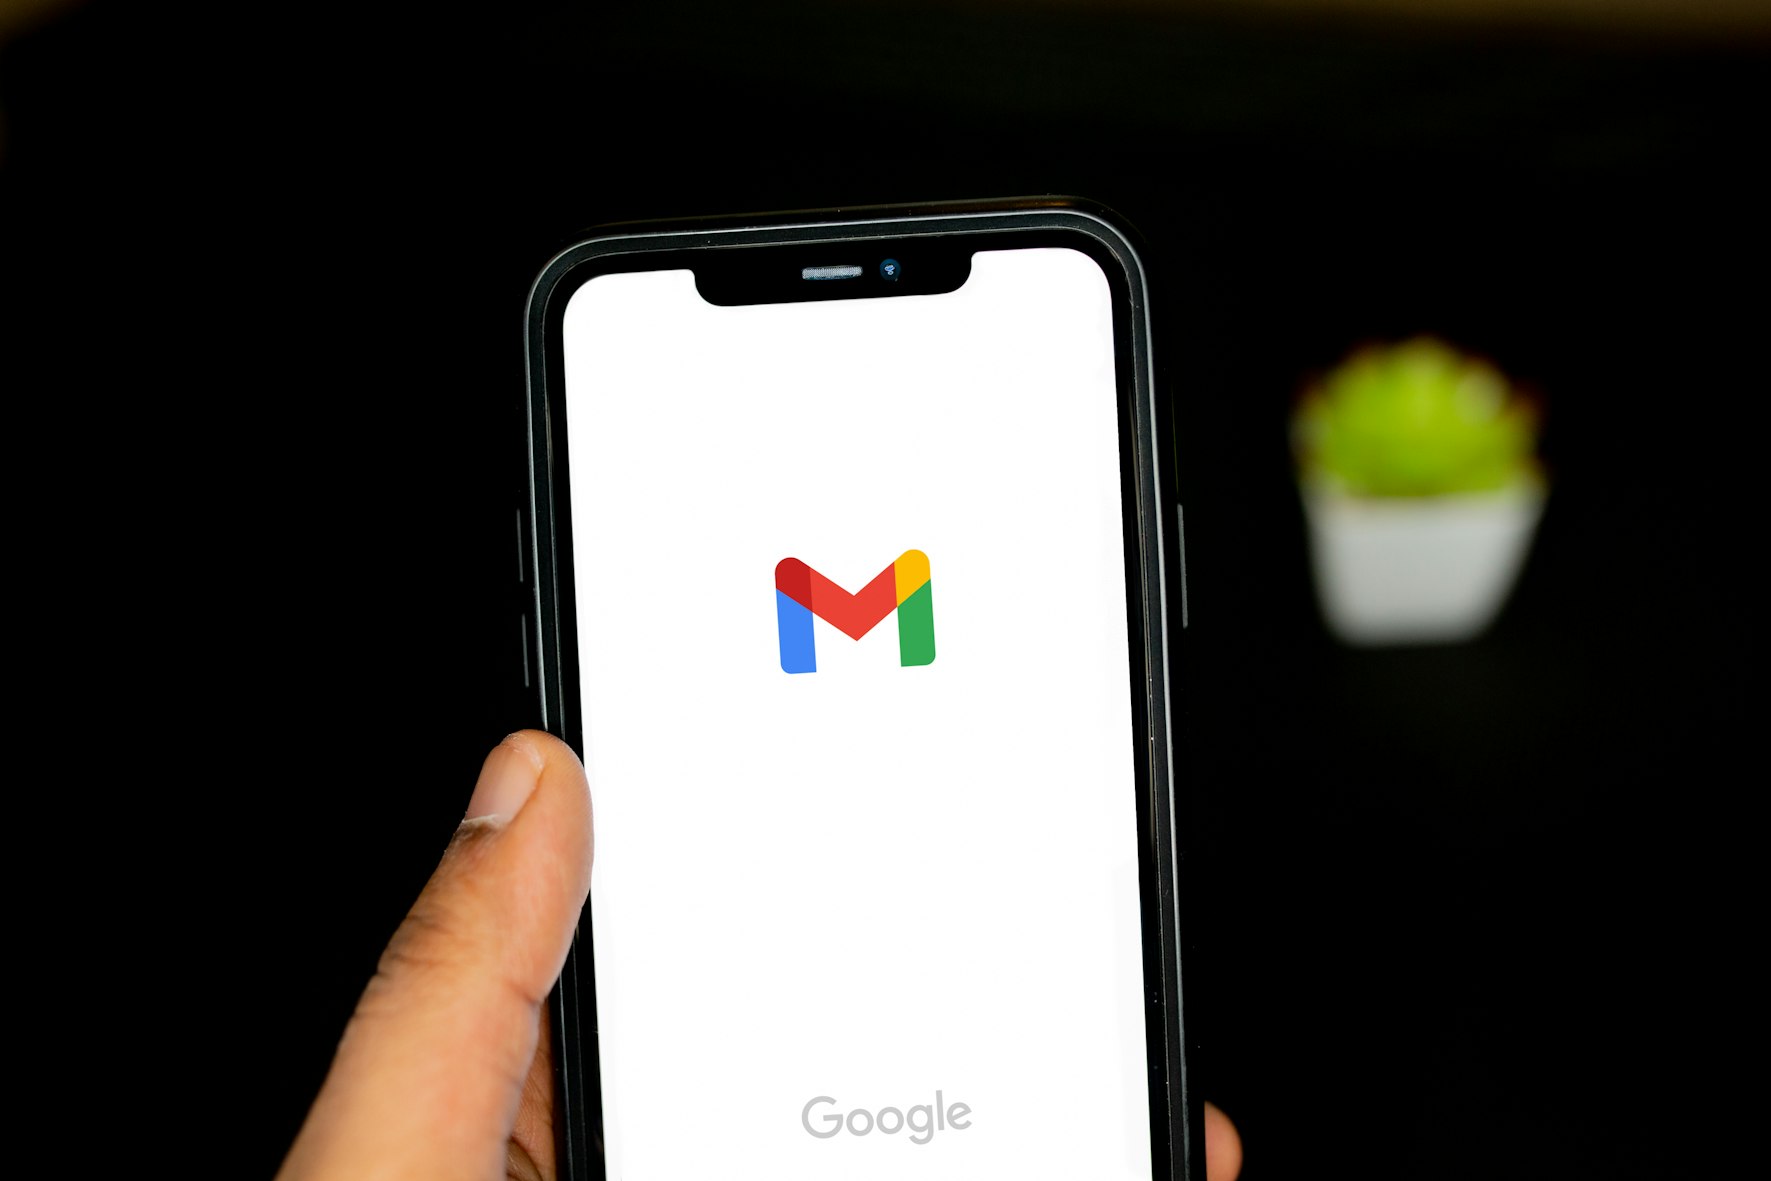 Gmail app logo on a phone screen.